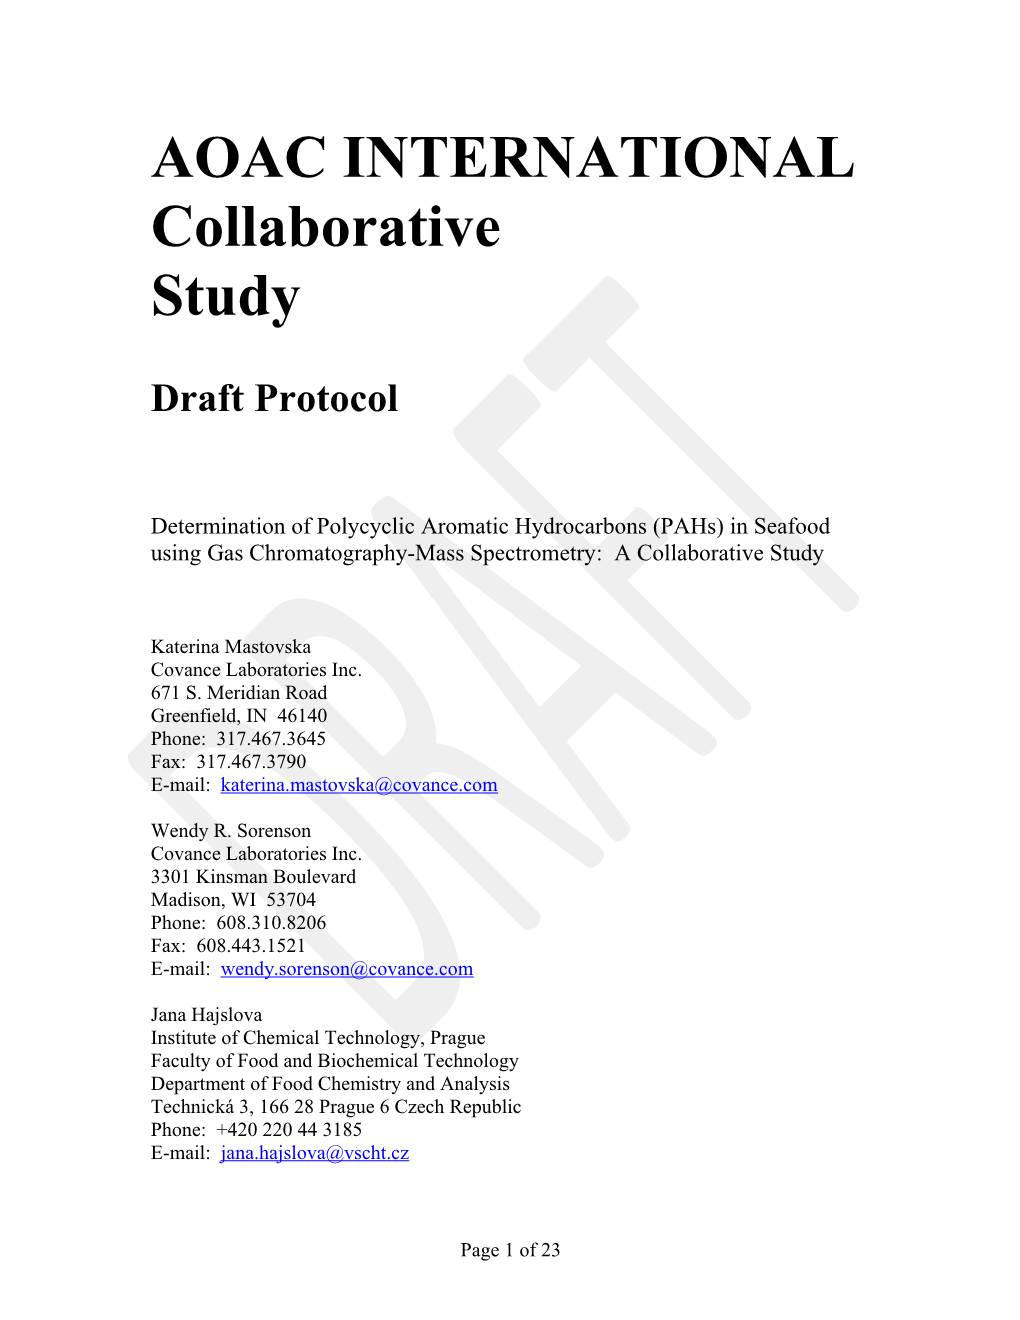 AOAC INTERNATIONAL Collaborative Study Draft Protocol Determination of Polycyclic Aromatic